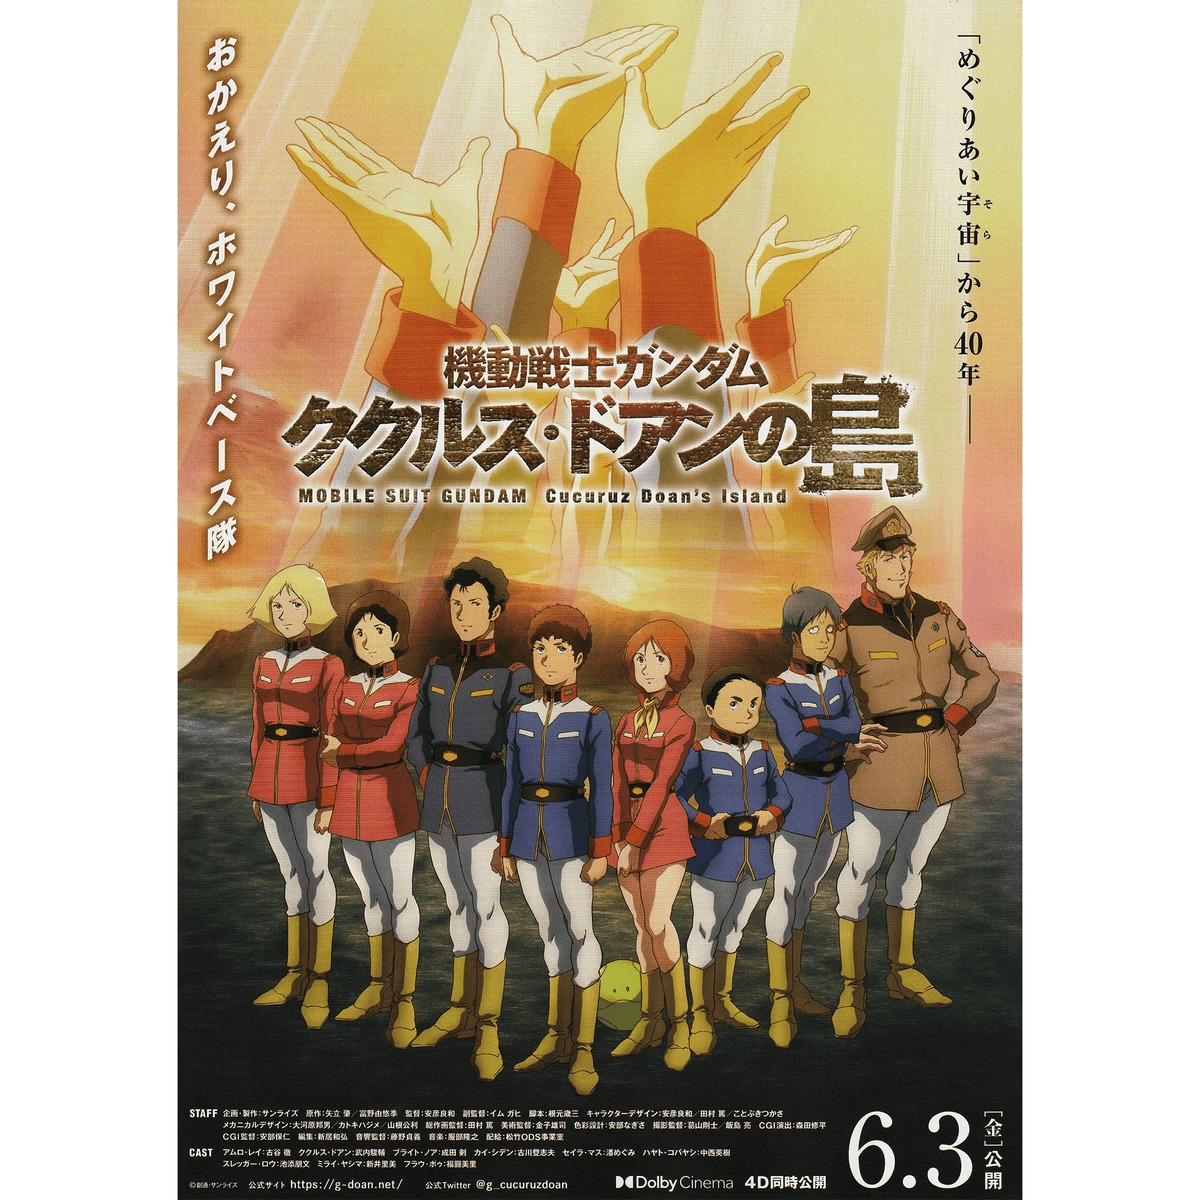 Posters, Prints, & Visual Artwork Japanese Chirashi B5 Mini Anime Movie Poster Mobile Suit Gundam Cucuruz Doan's Island